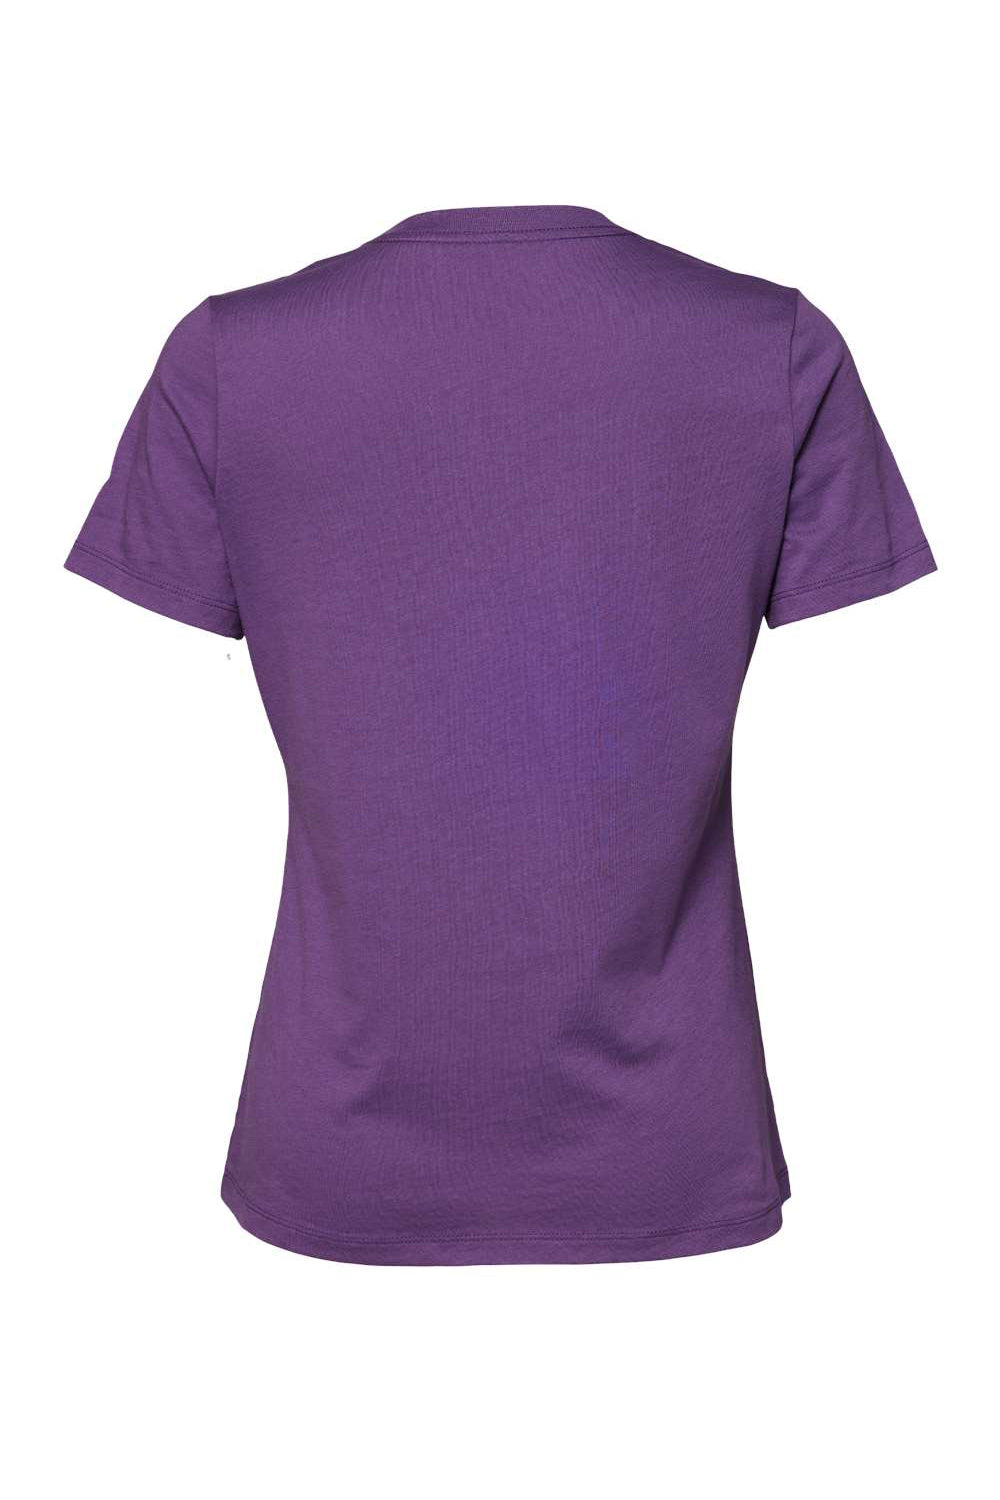 Bella + Canvas BC6400/B6400/6400 Womens Relaxed Jersey Short Sleeve Crewneck T-Shirt Royal Purple Flat Back